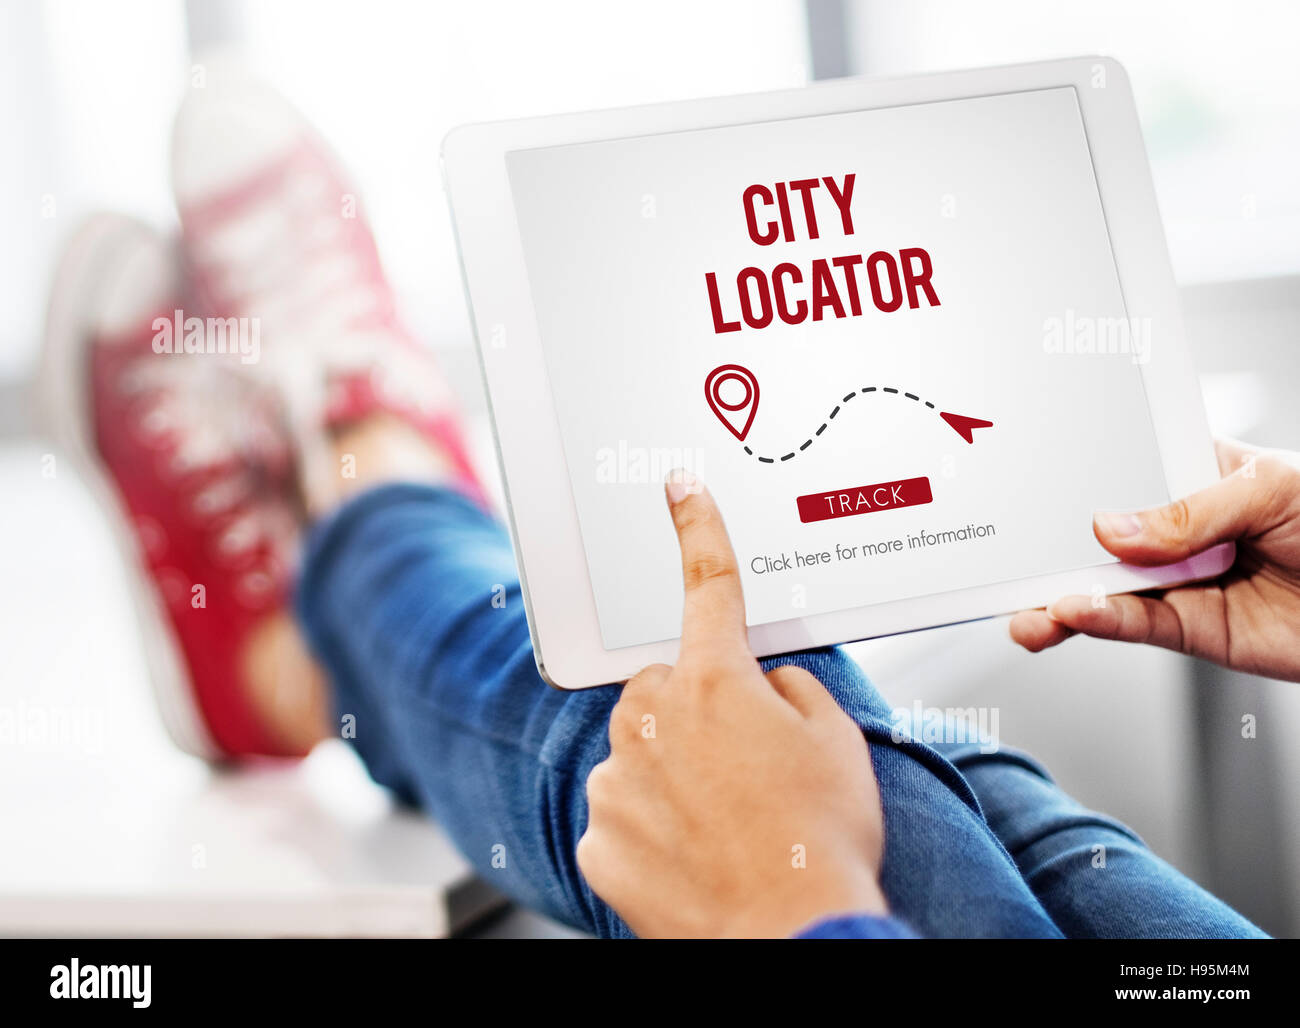 City-Locator-Richtung-Metropole-Bevölkerung-Konzept Stockfoto